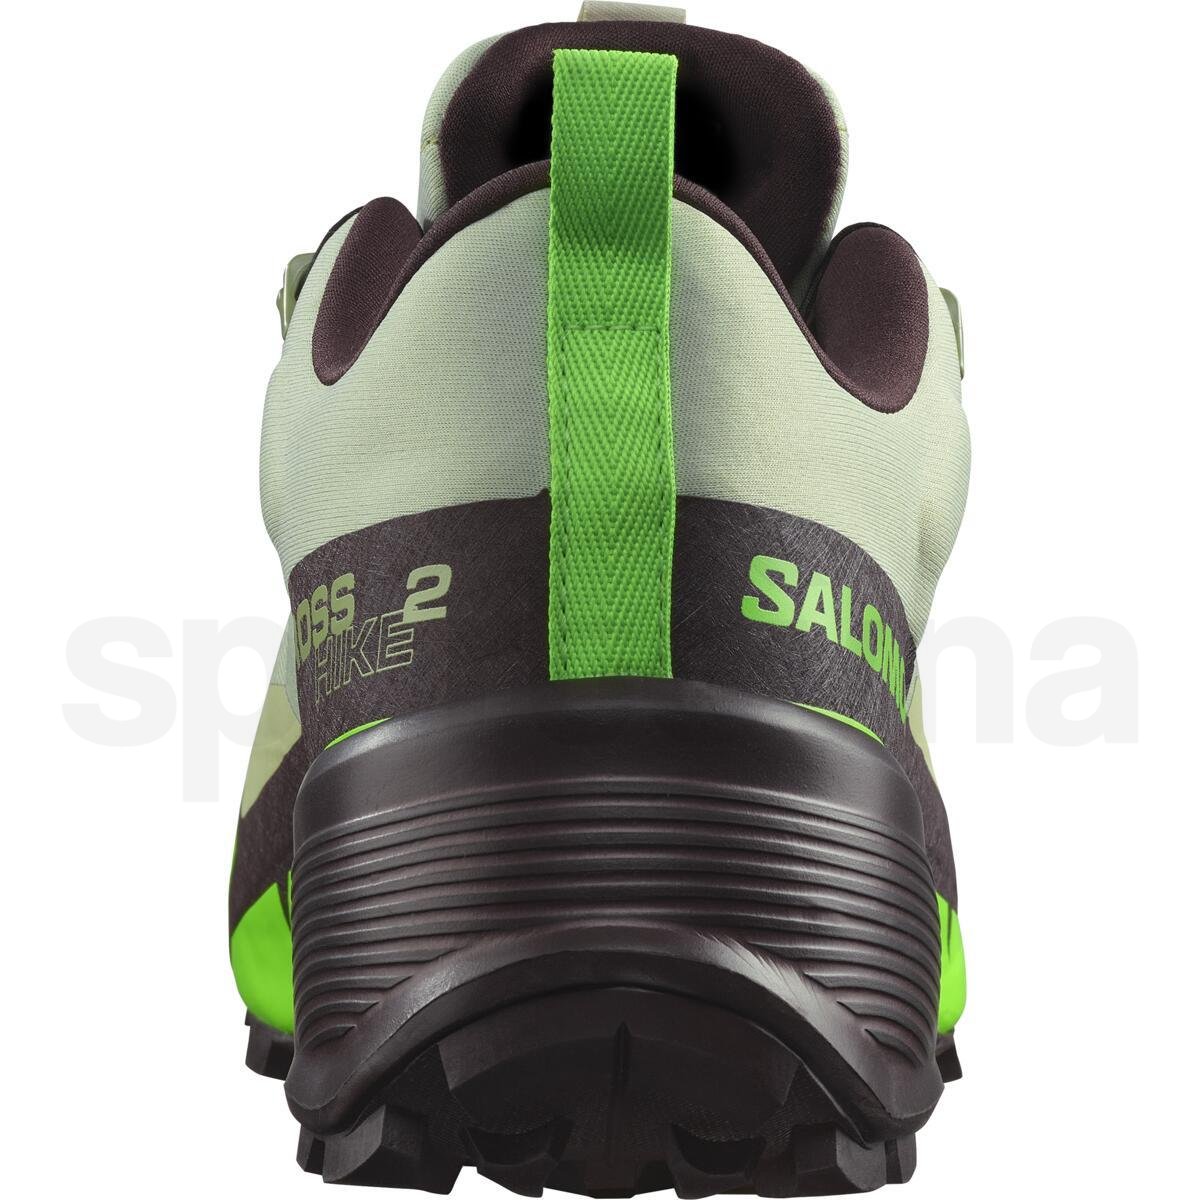 Obuv Salomon Cross Hike GTX 2 M - zelená/černá